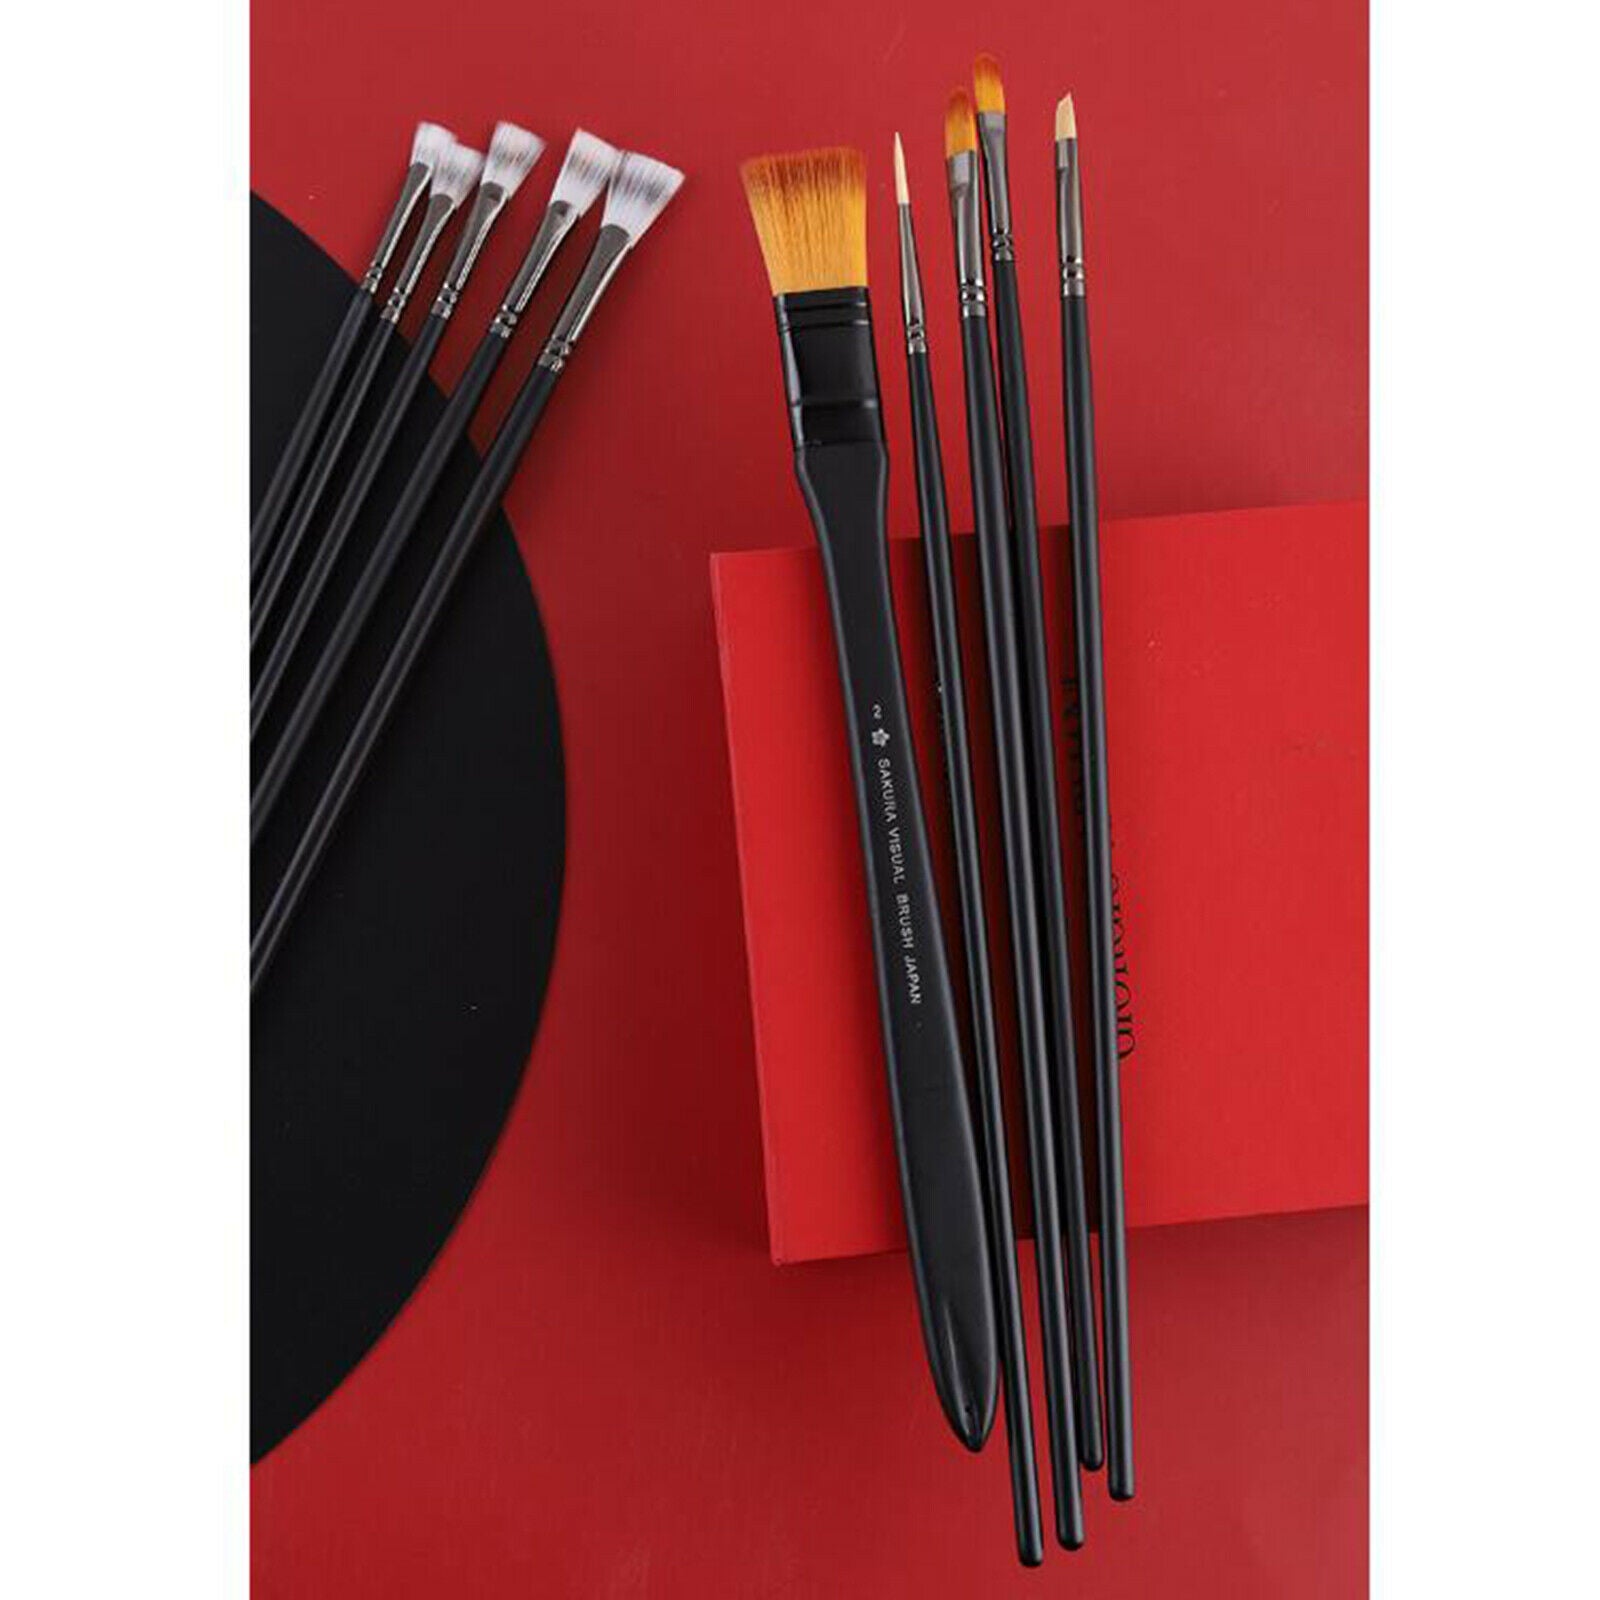 10x Nylon Artist Paint Brush Set Durable Oil Painting Rock Paintbrushes Pen